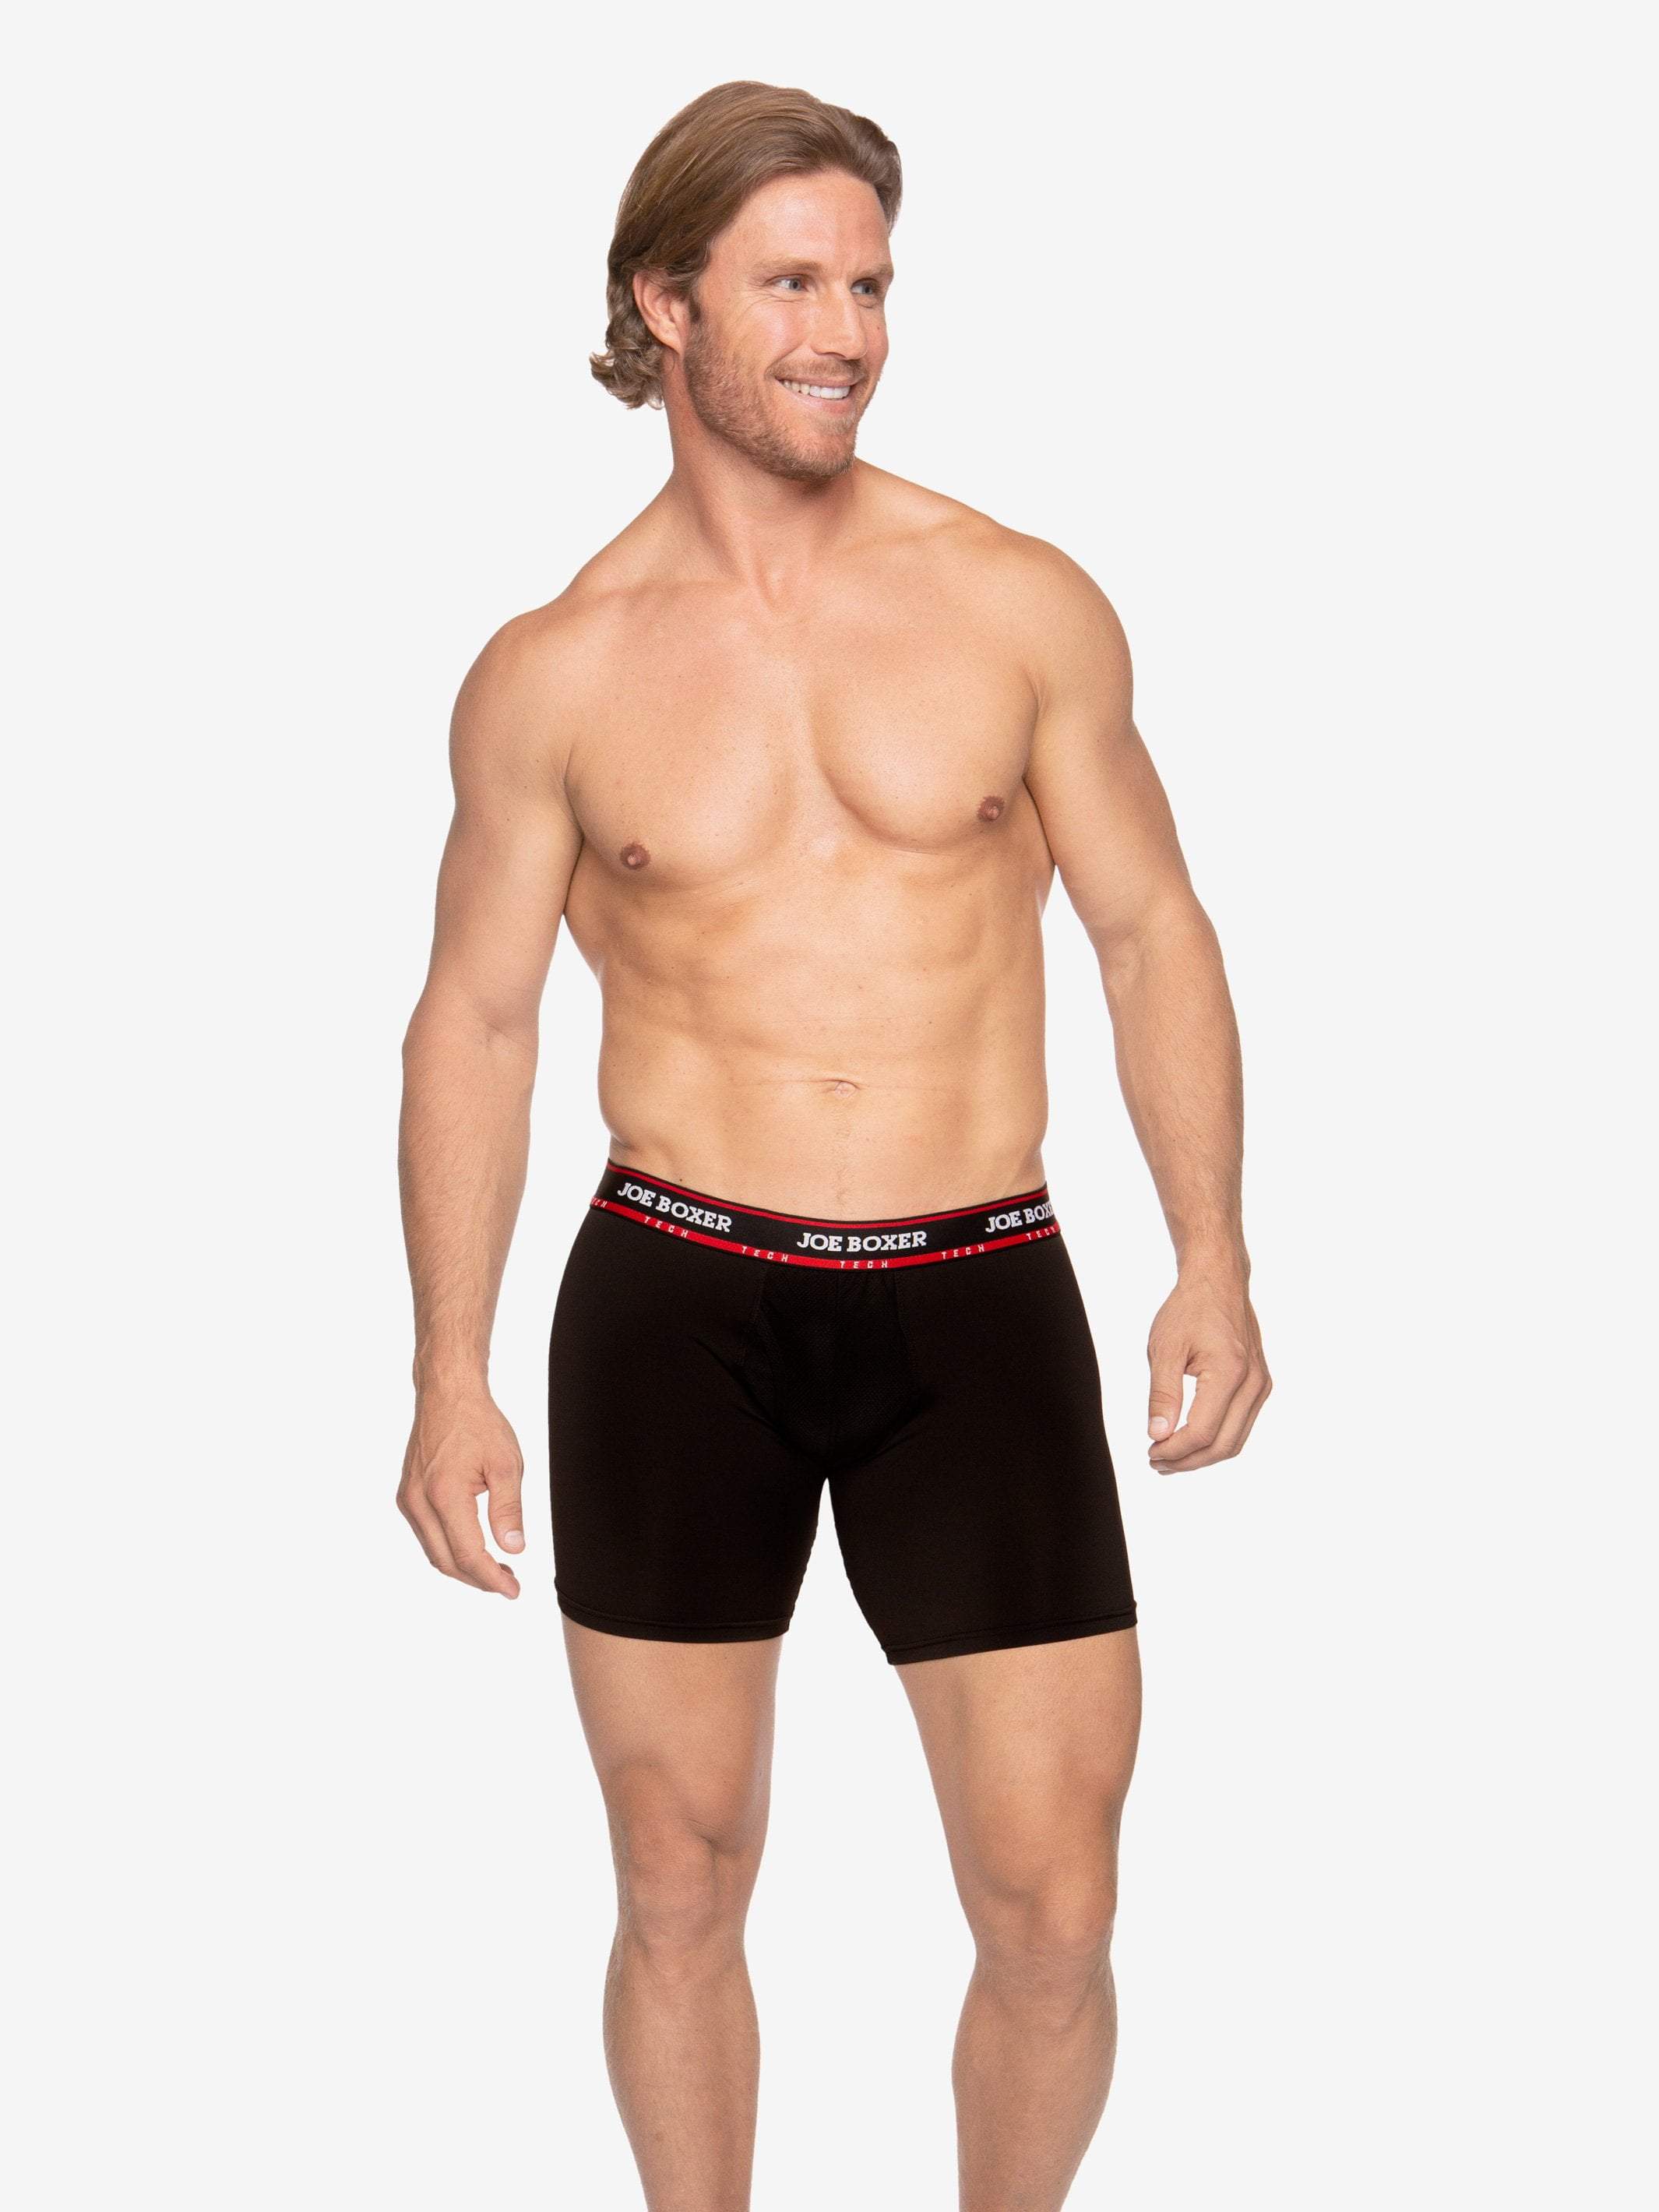 Sports & Athletic Underwear - Macy's